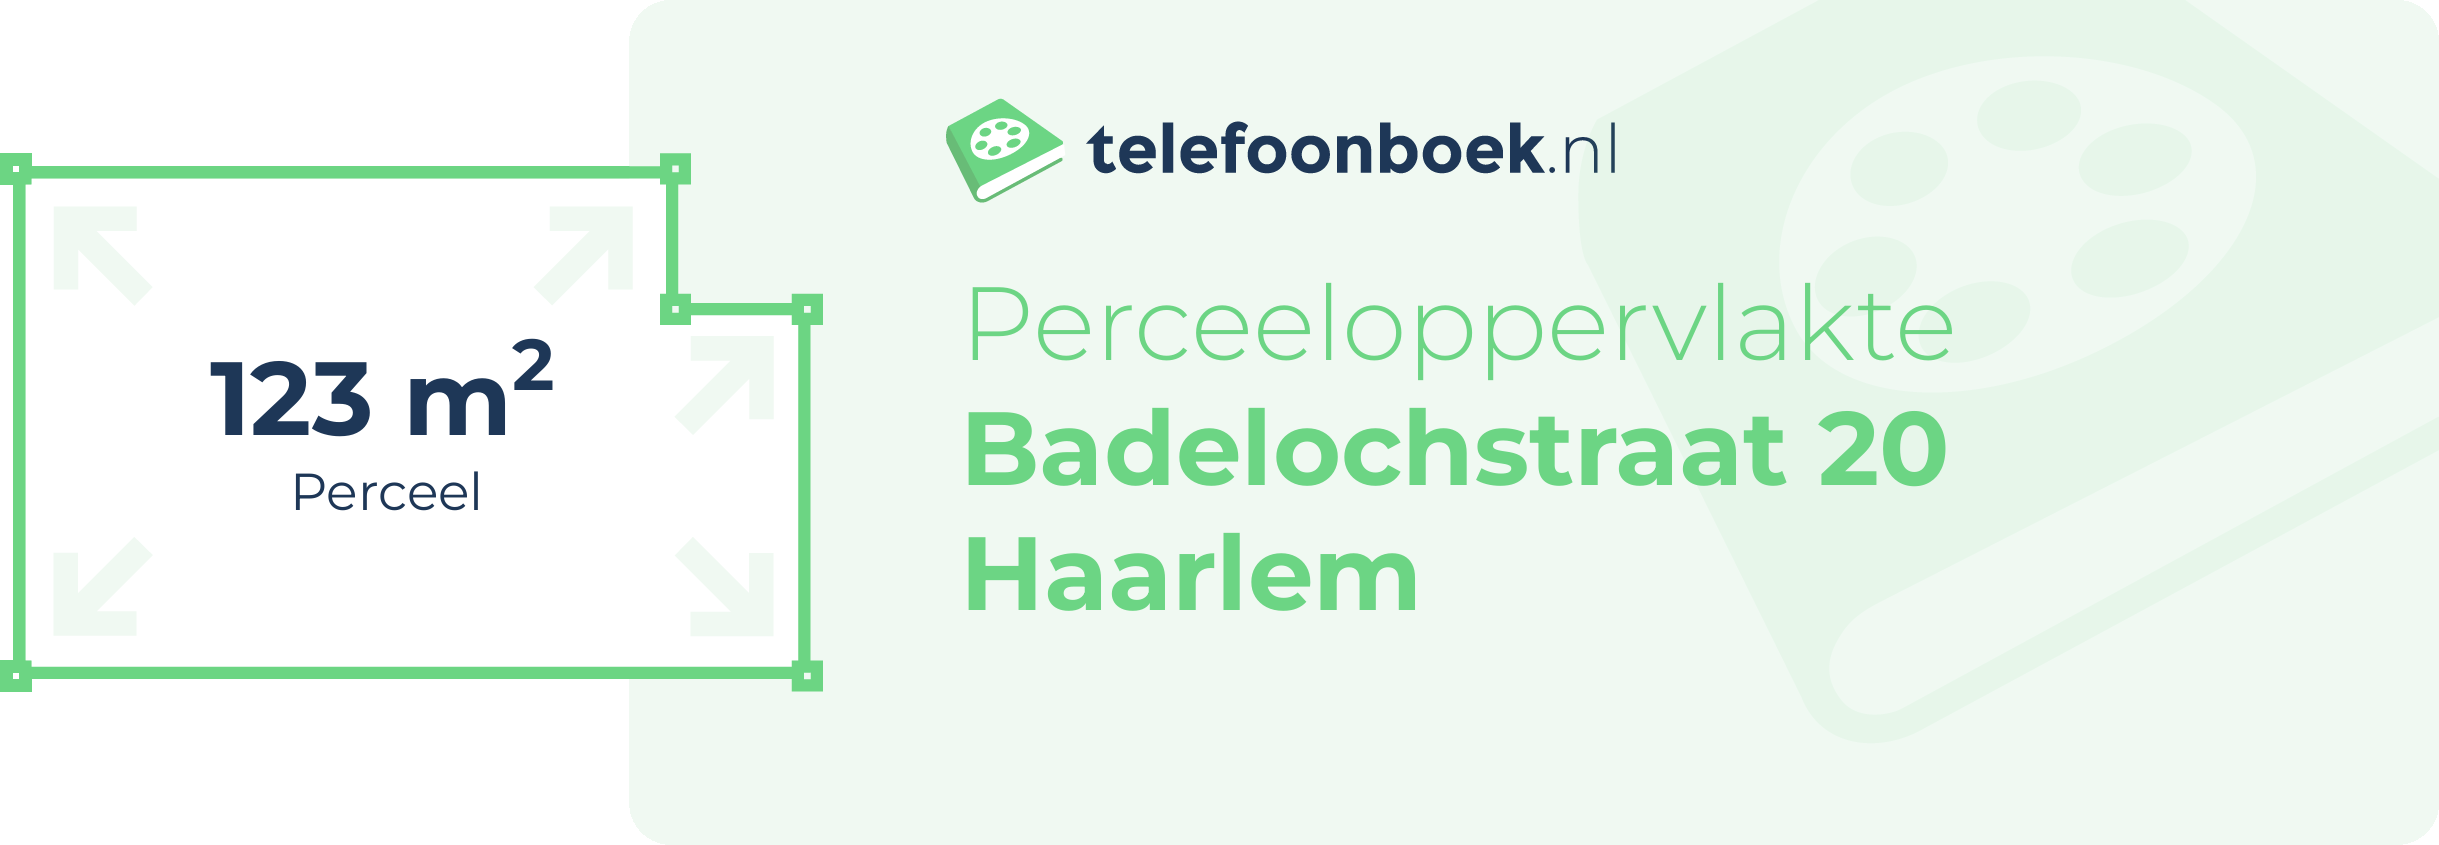 Perceeloppervlakte Badelochstraat 20 Haarlem